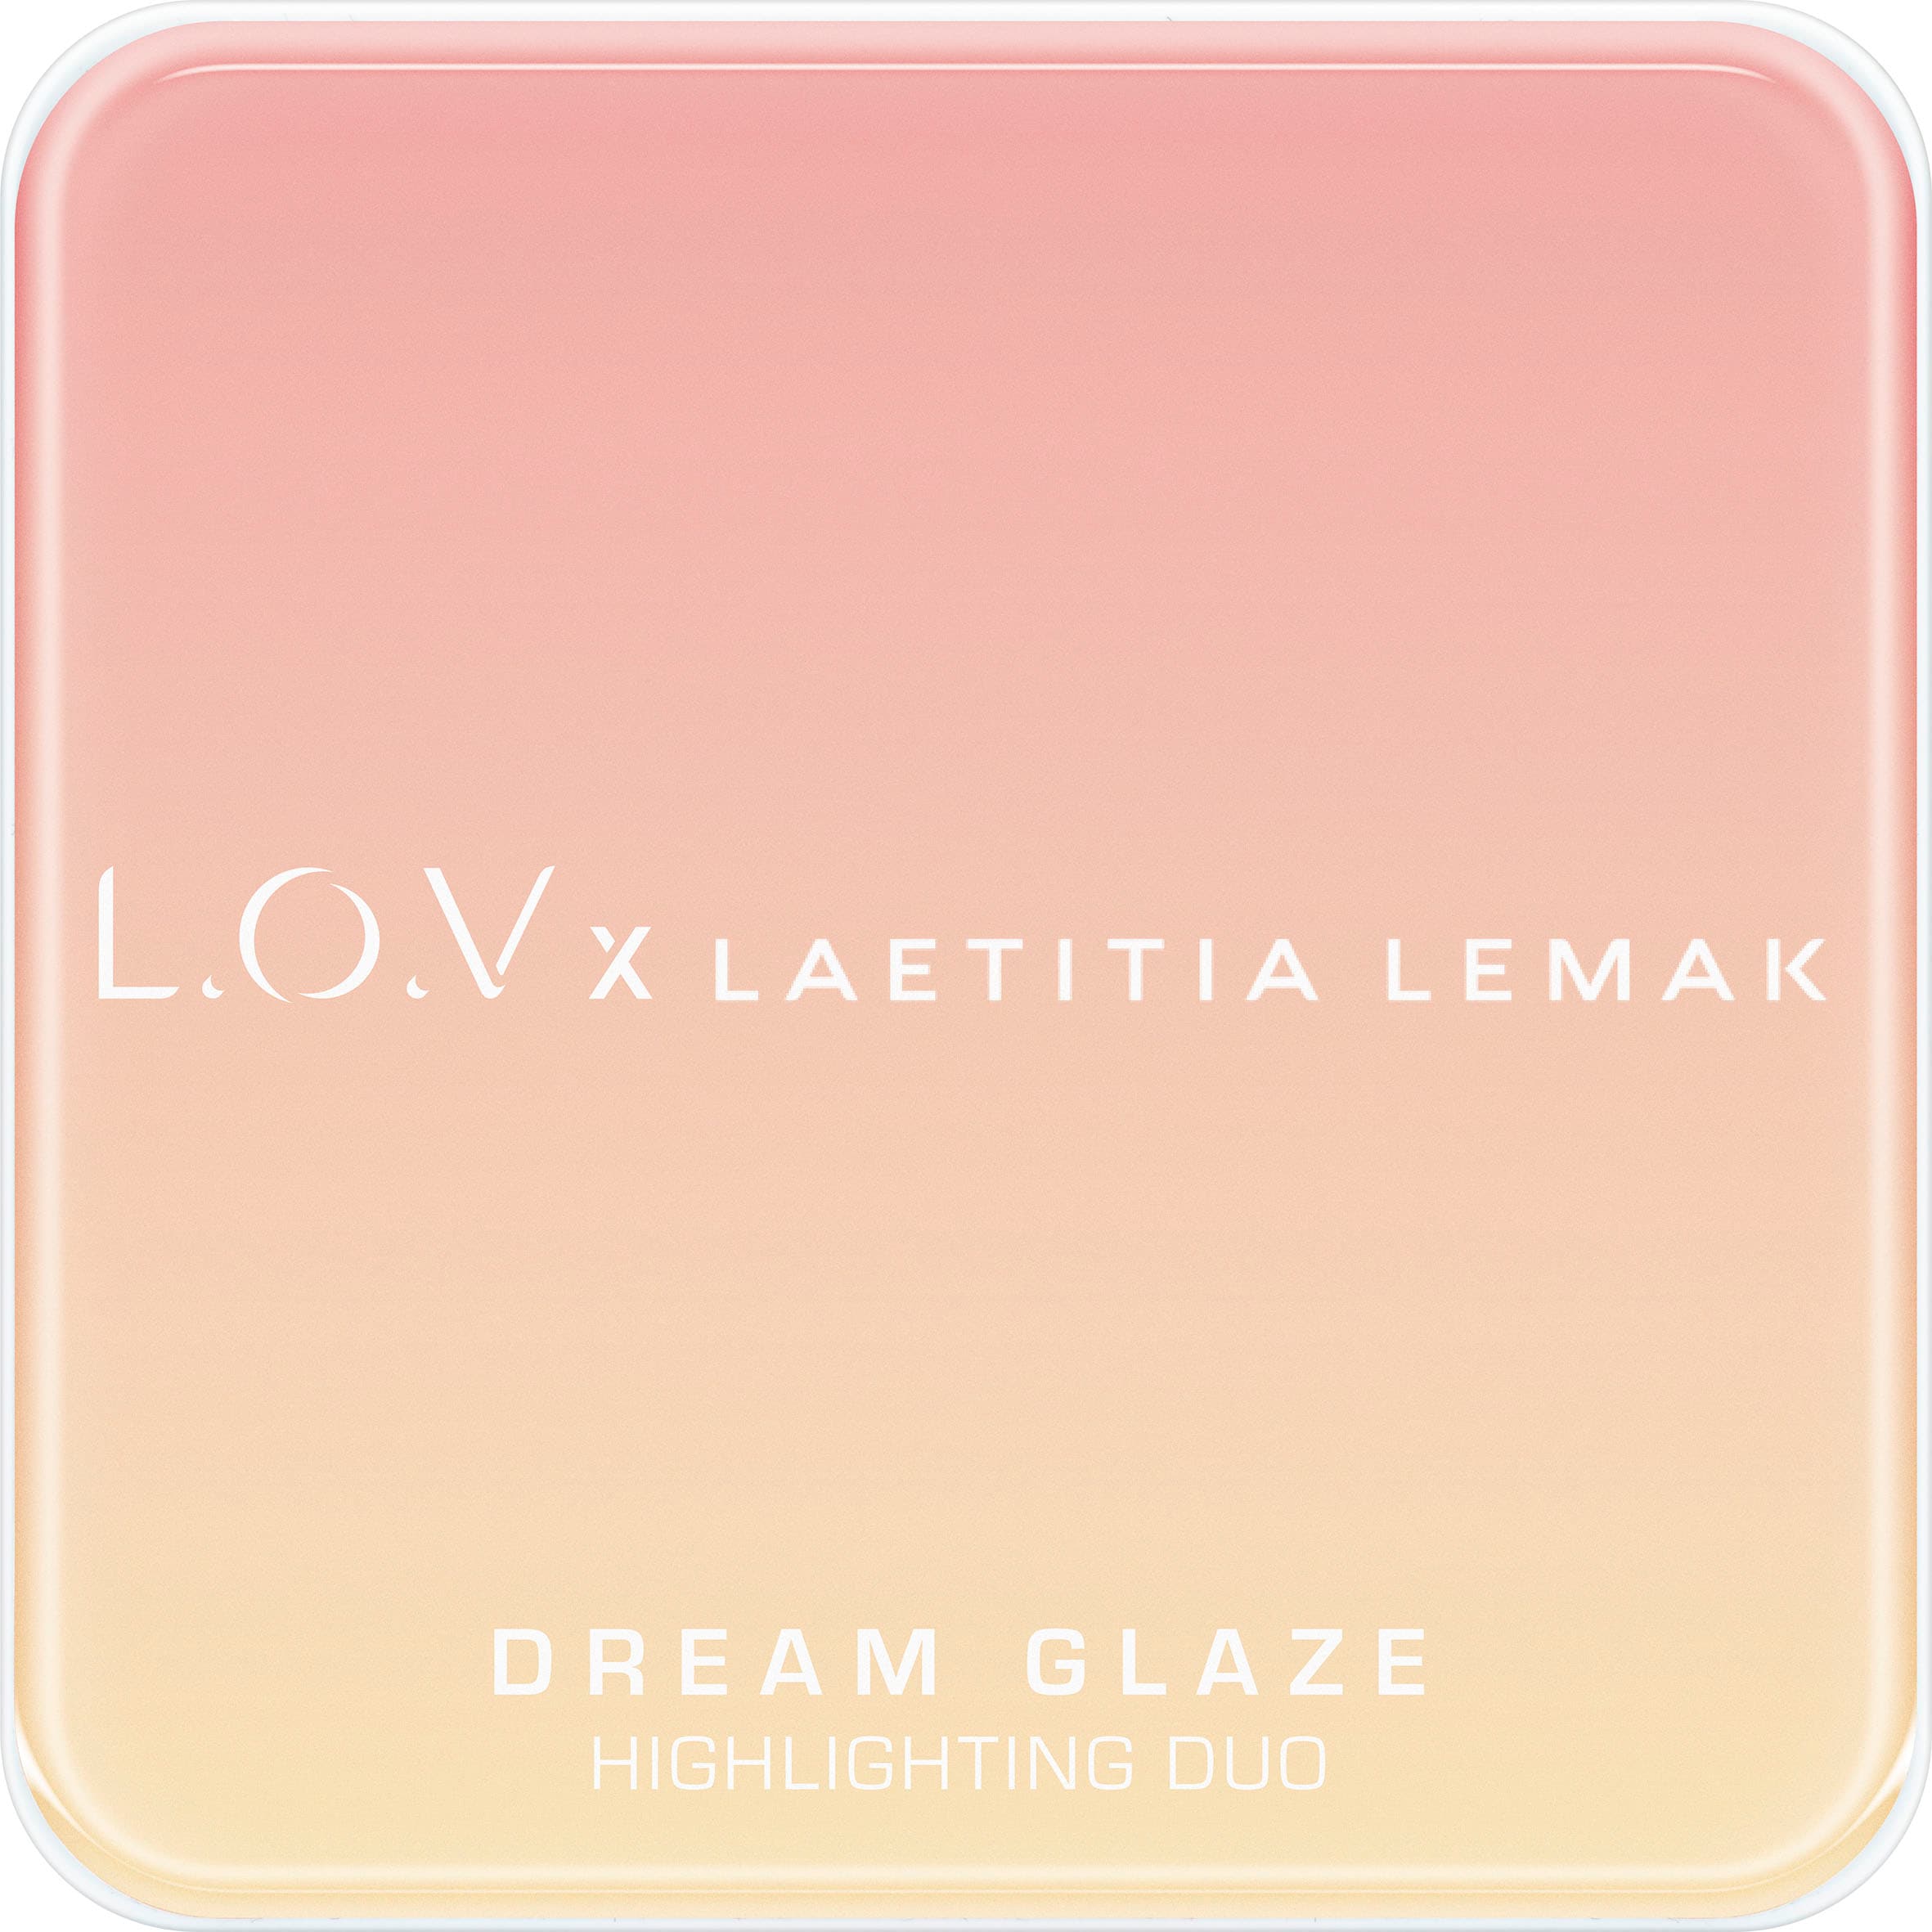 L.O.V Highlighter-Palette »L.O.V x LAETITIA LEMAK DREAM GLAZE Highlighting  Duo« online kaufen